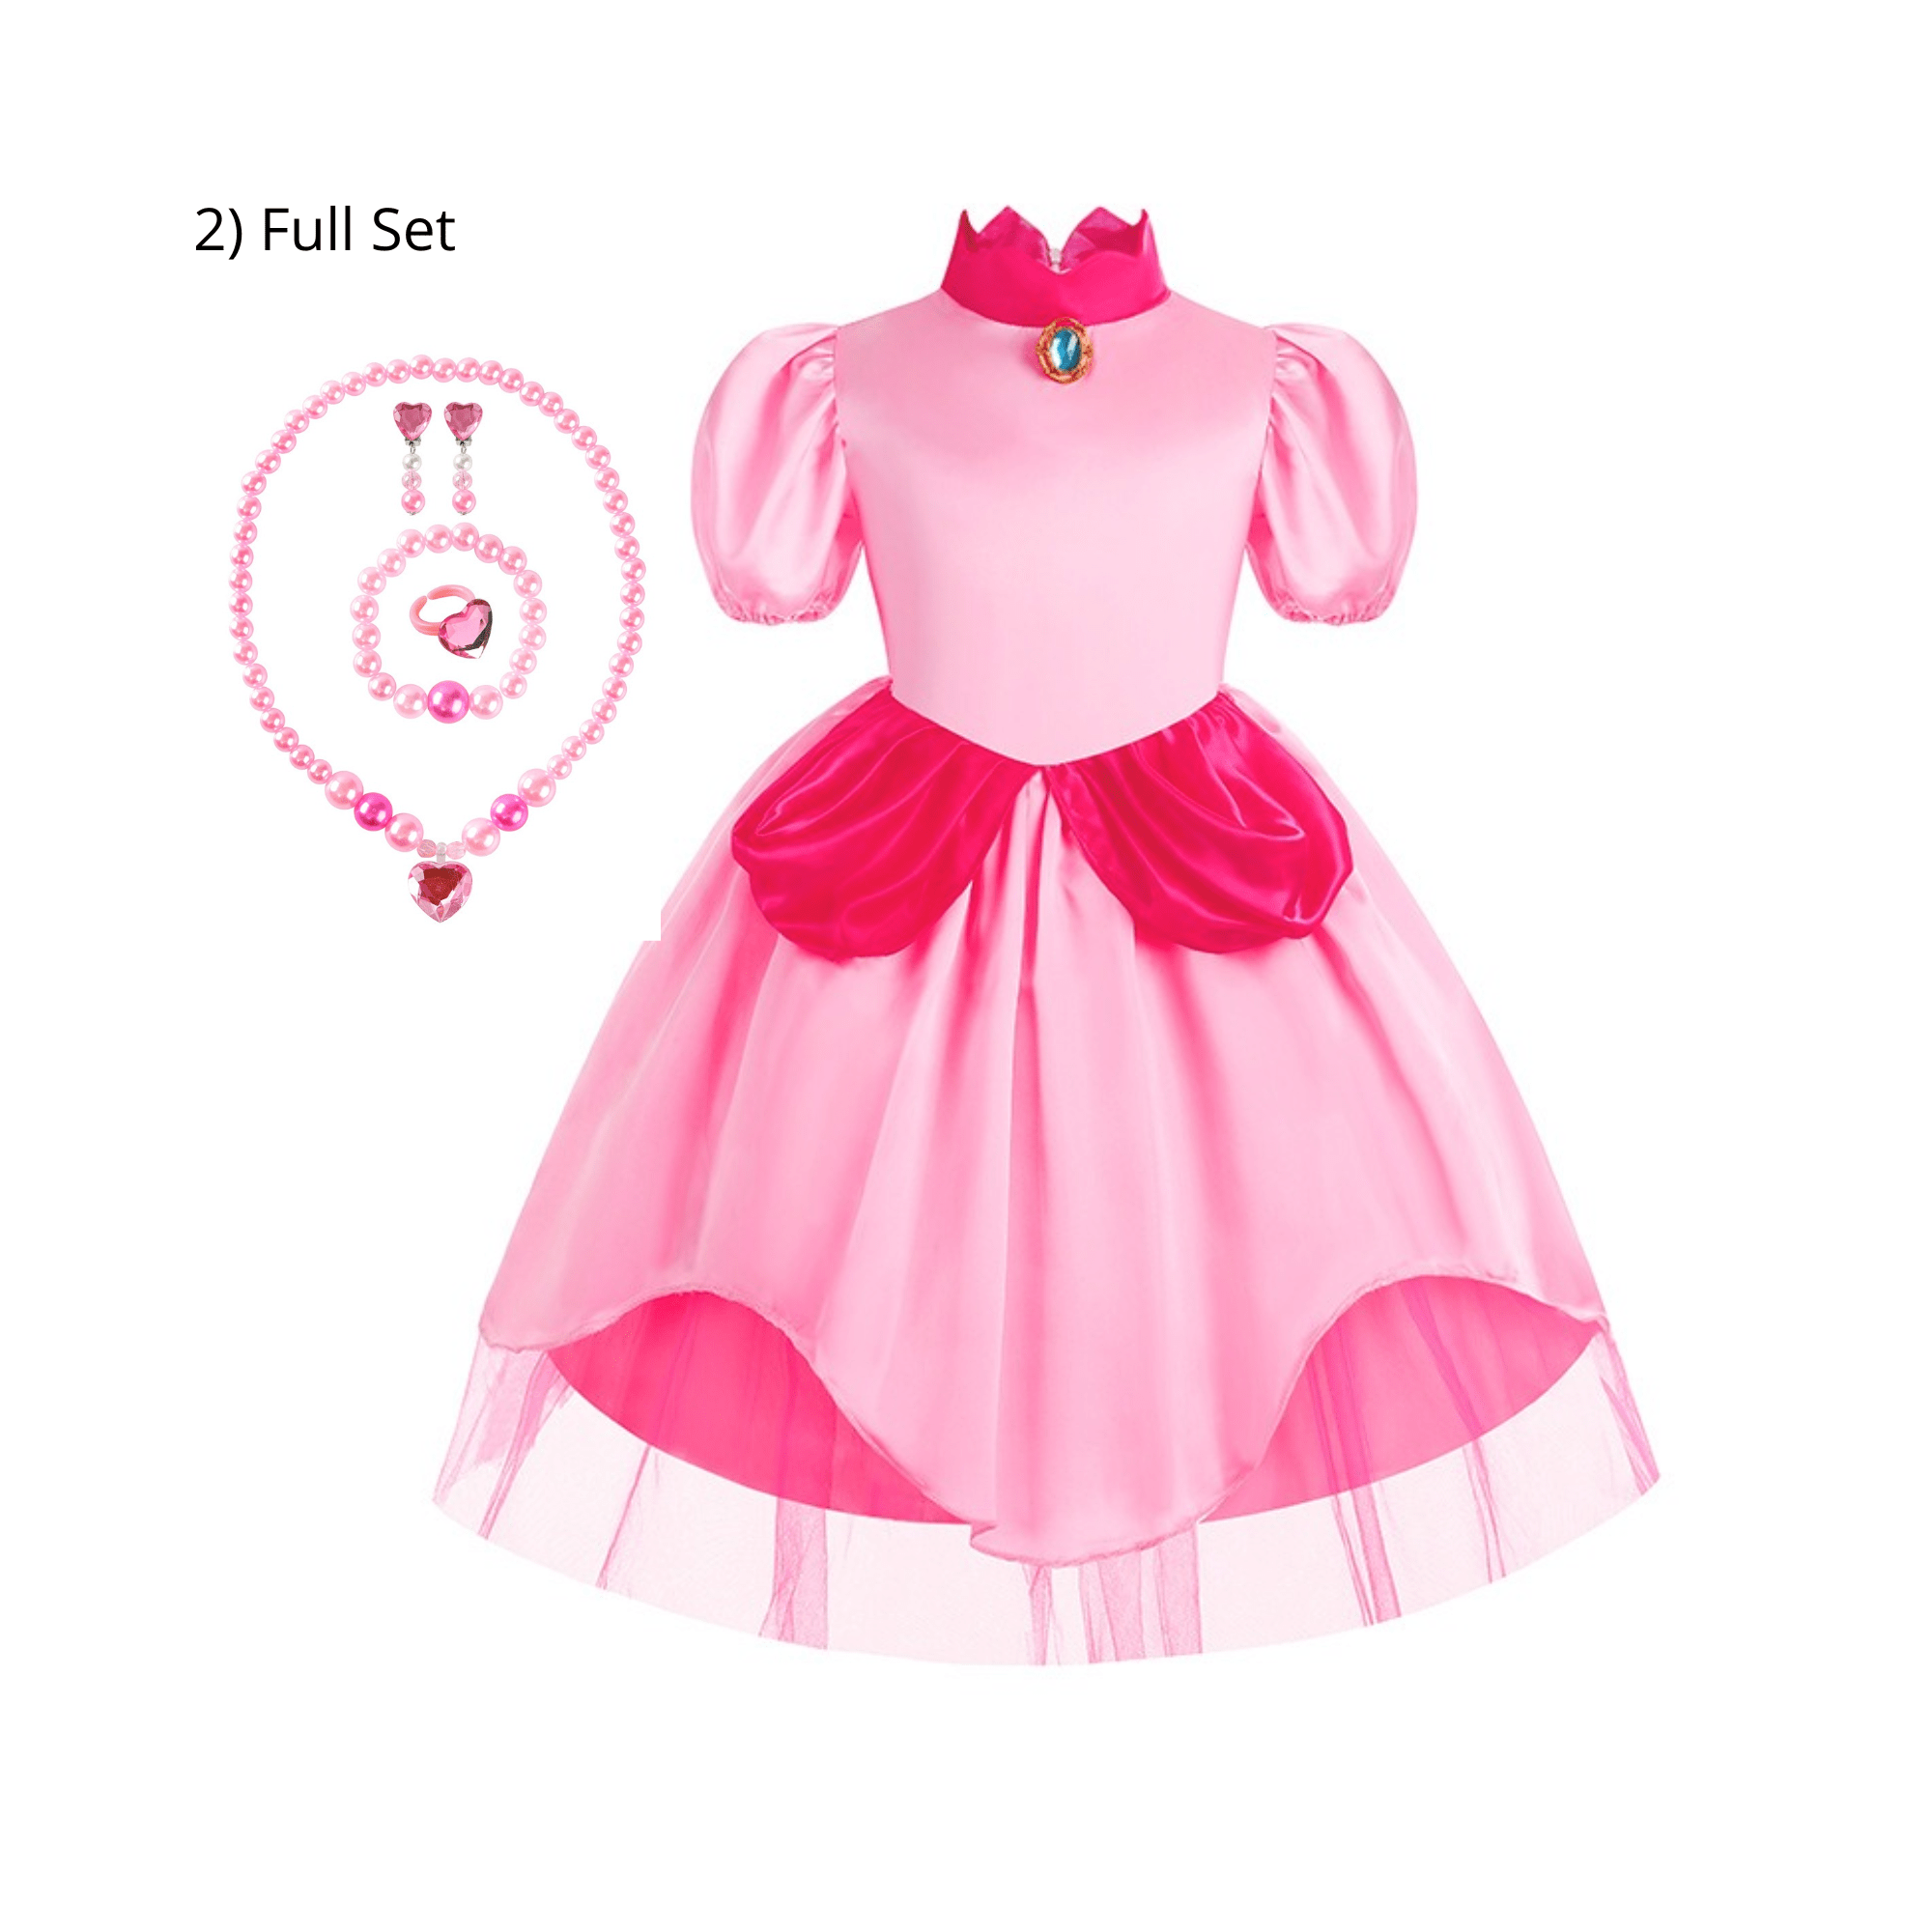 Disney-Inspired Mario Bros Princess Peach Dress, Perfect for Halloween and Birthdays Full Set